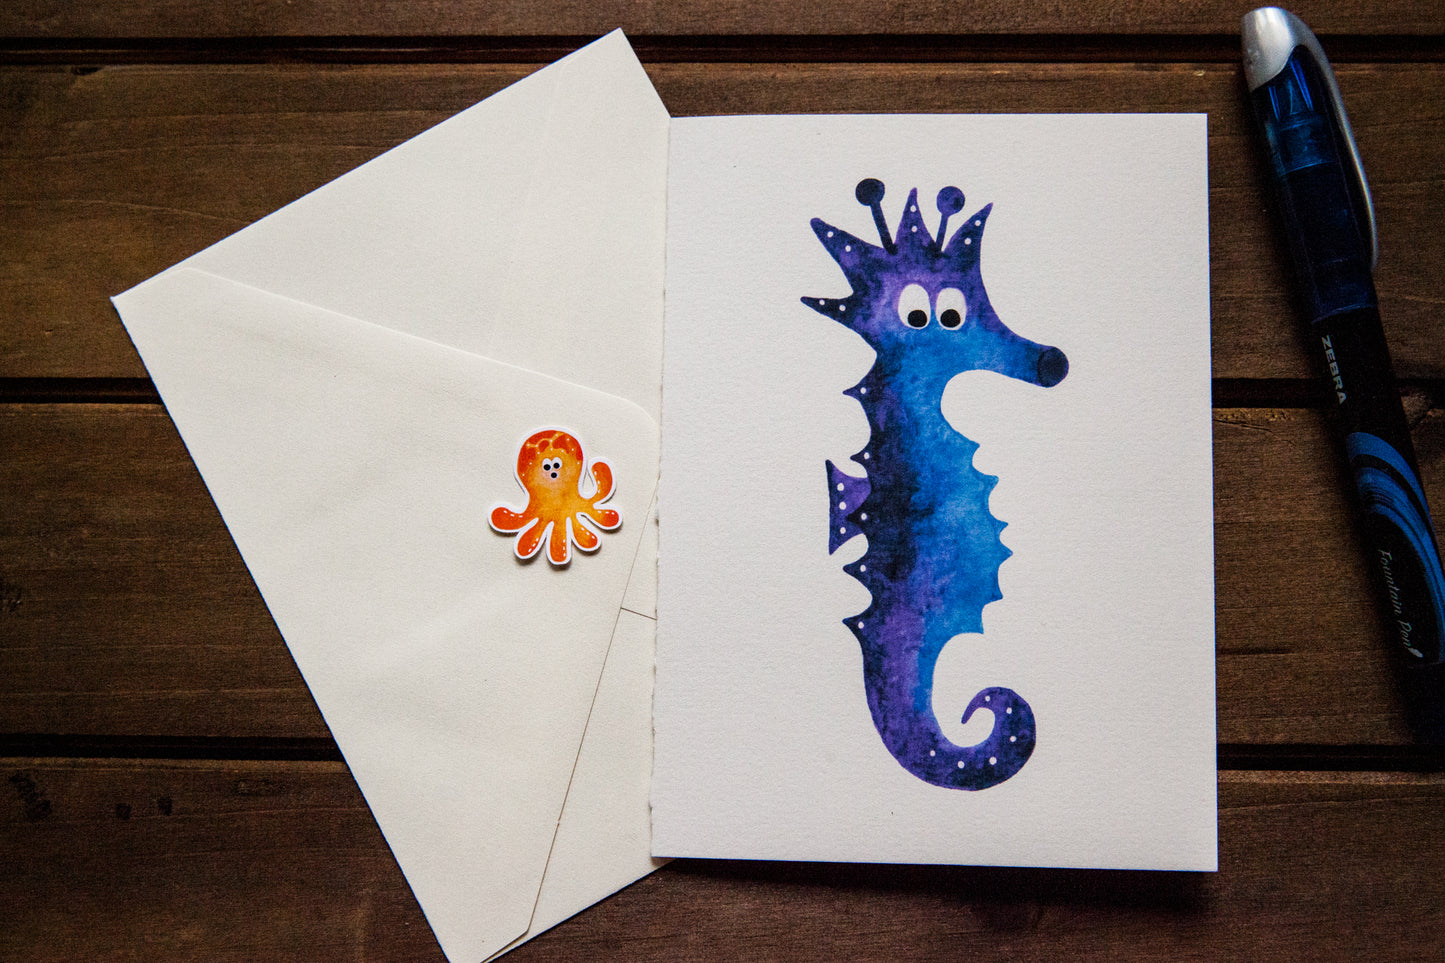 Seahorse Greeting Card